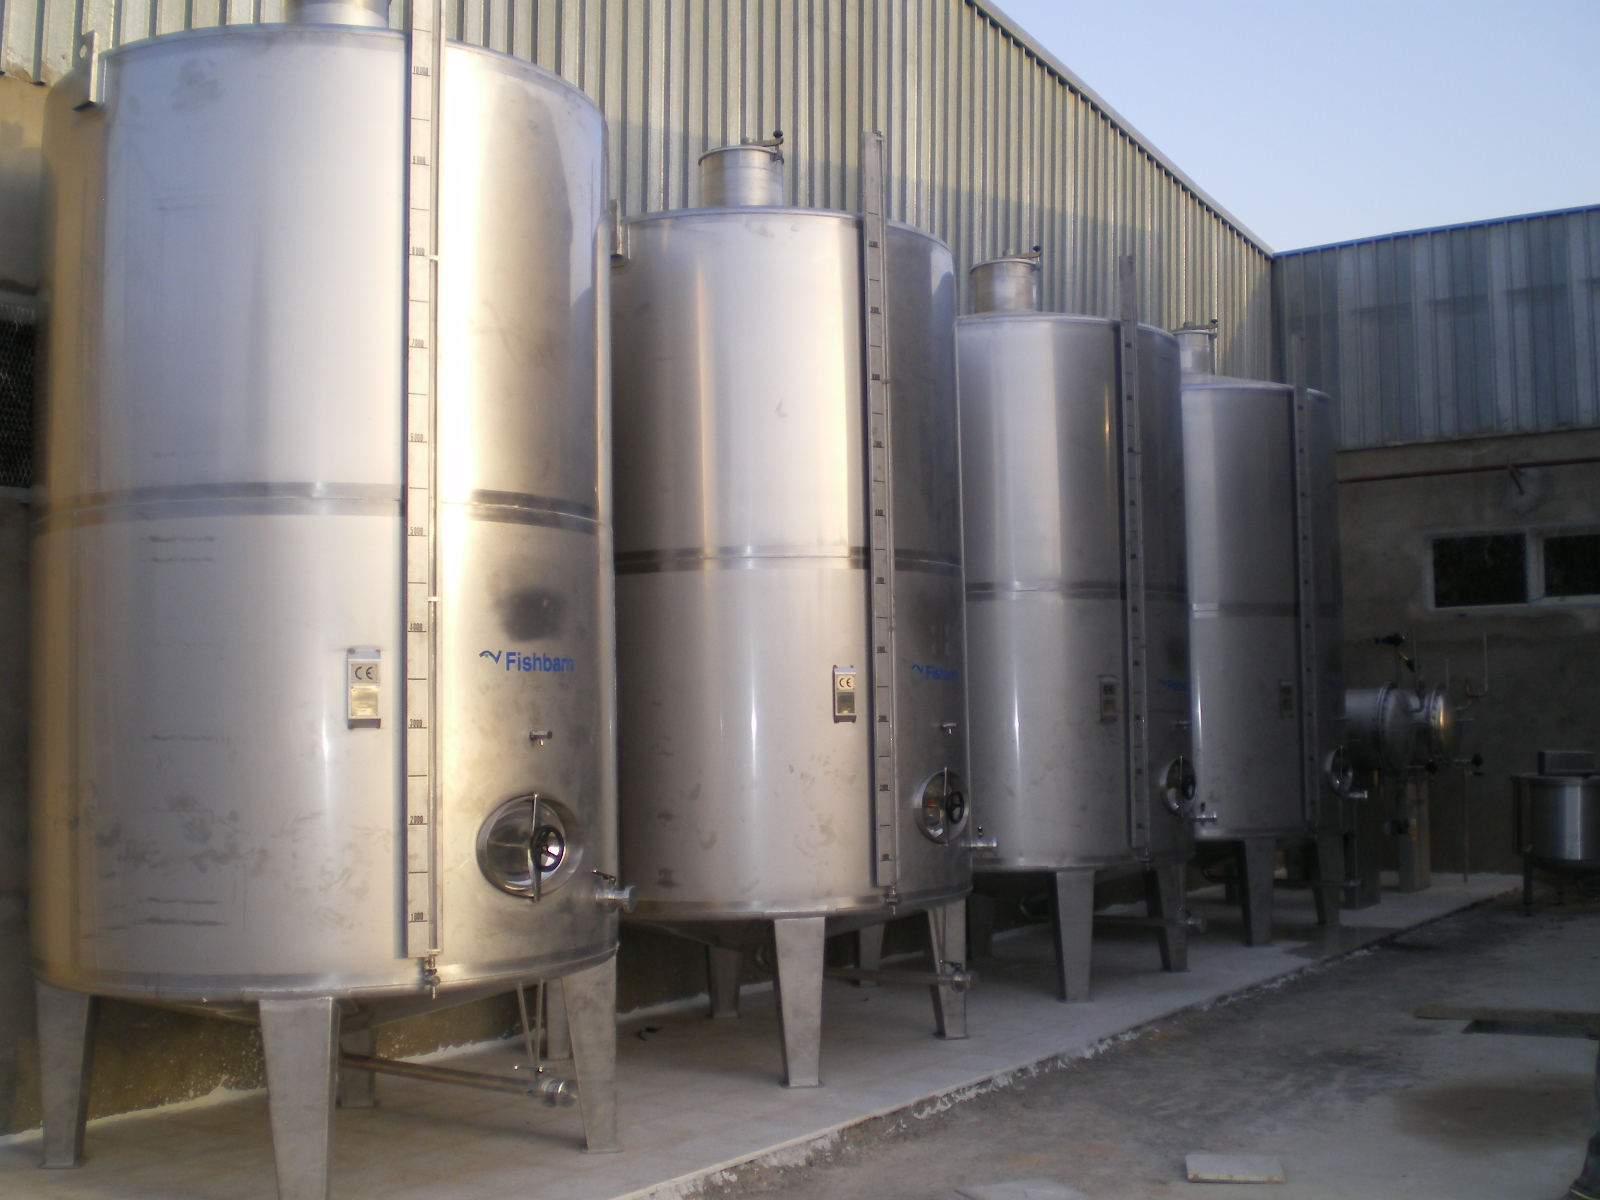 Storage Tank for Liquids